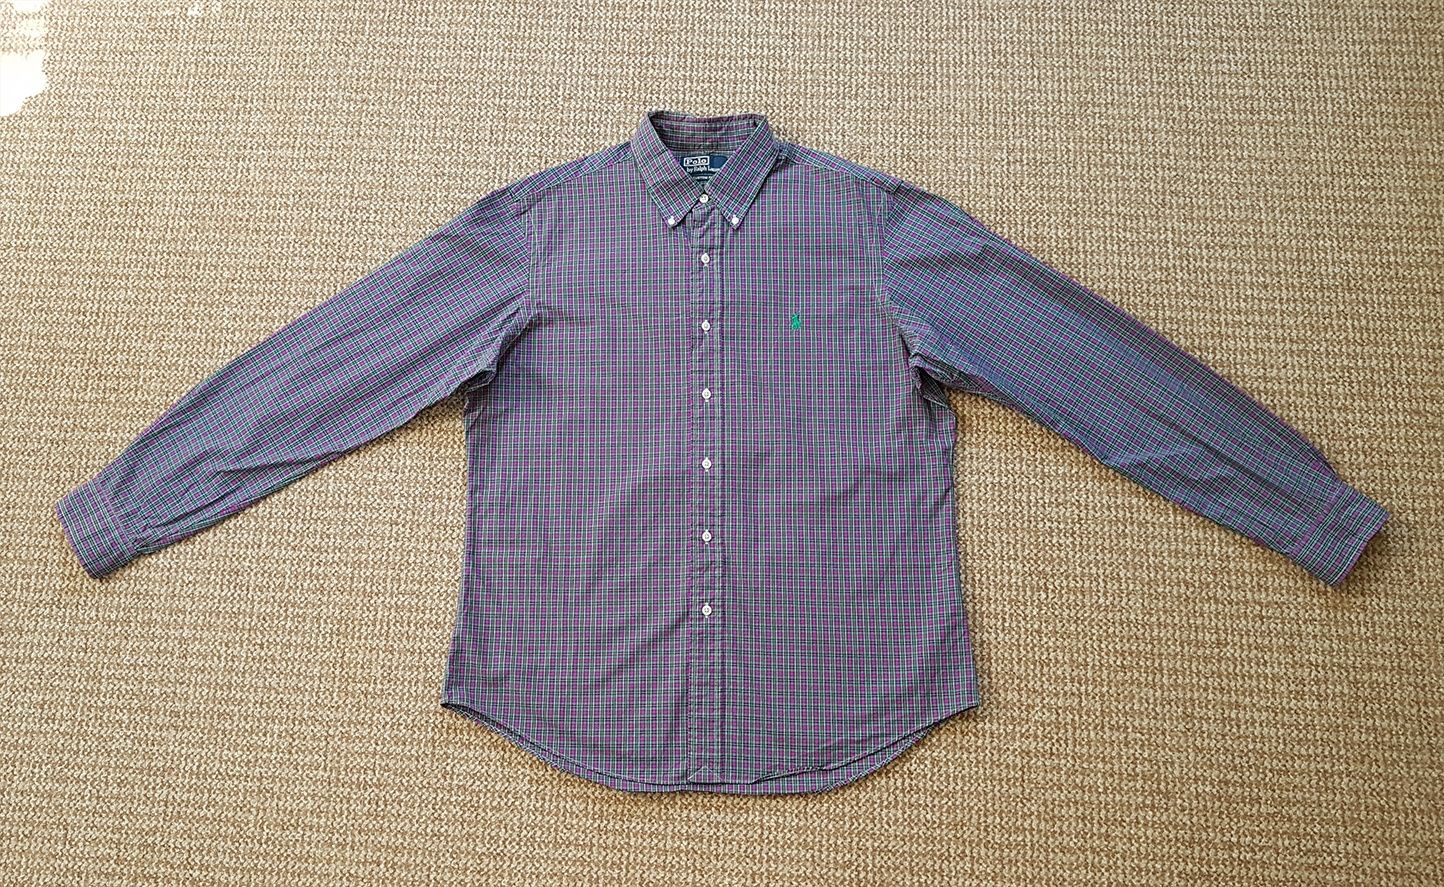 RALPH LAUREN Polo рубашка custom fit Оригинал L фиолетово зеленая